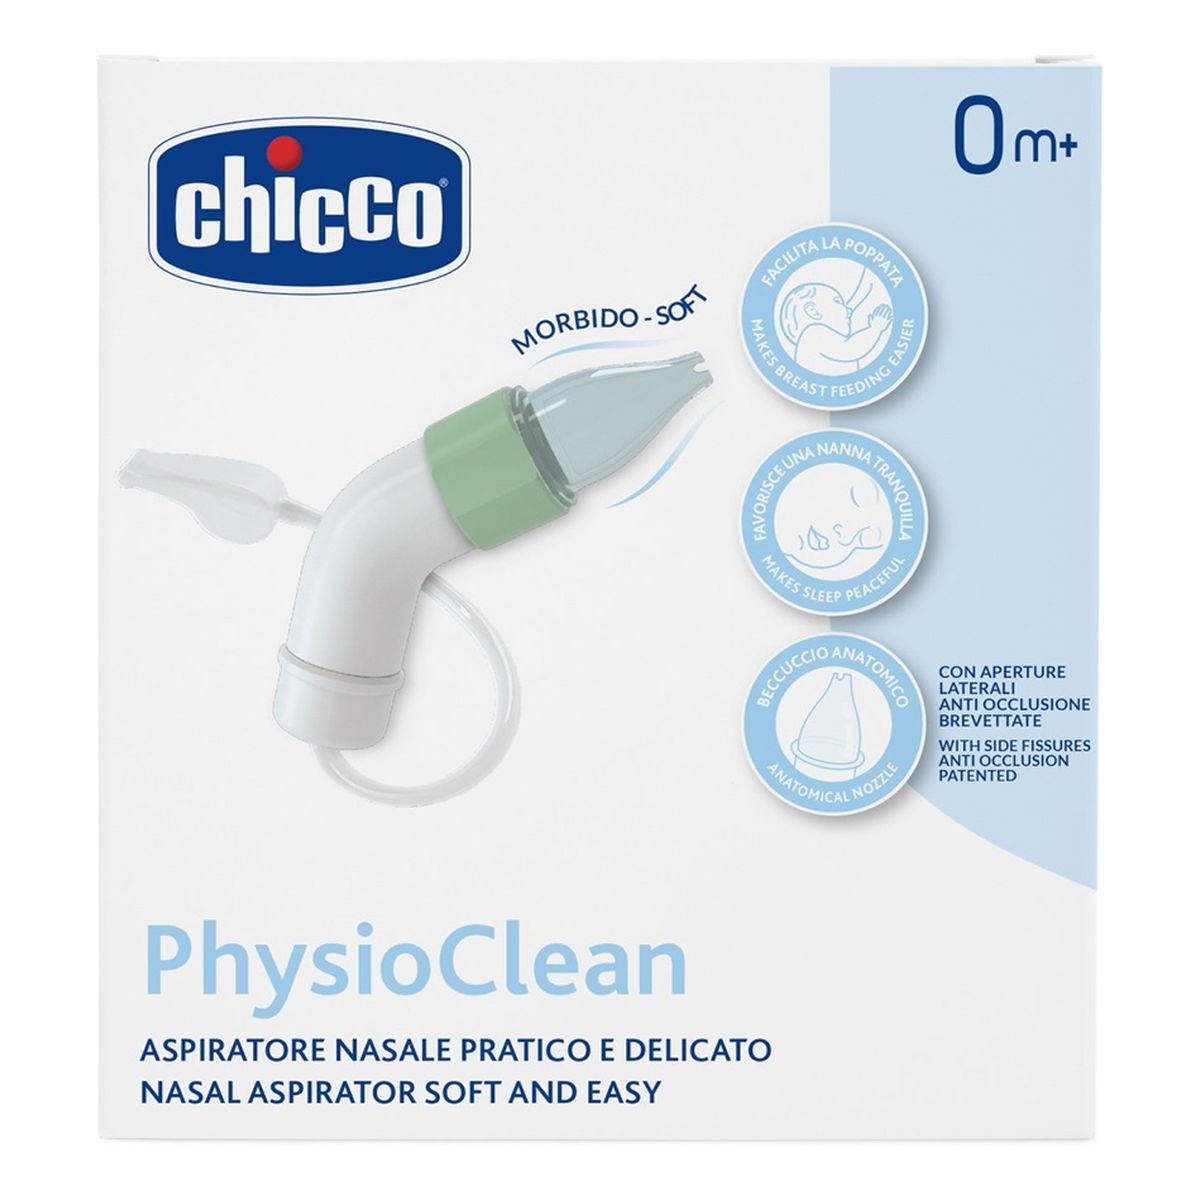 Chicco Physioclean aspirator do nosa 0m+